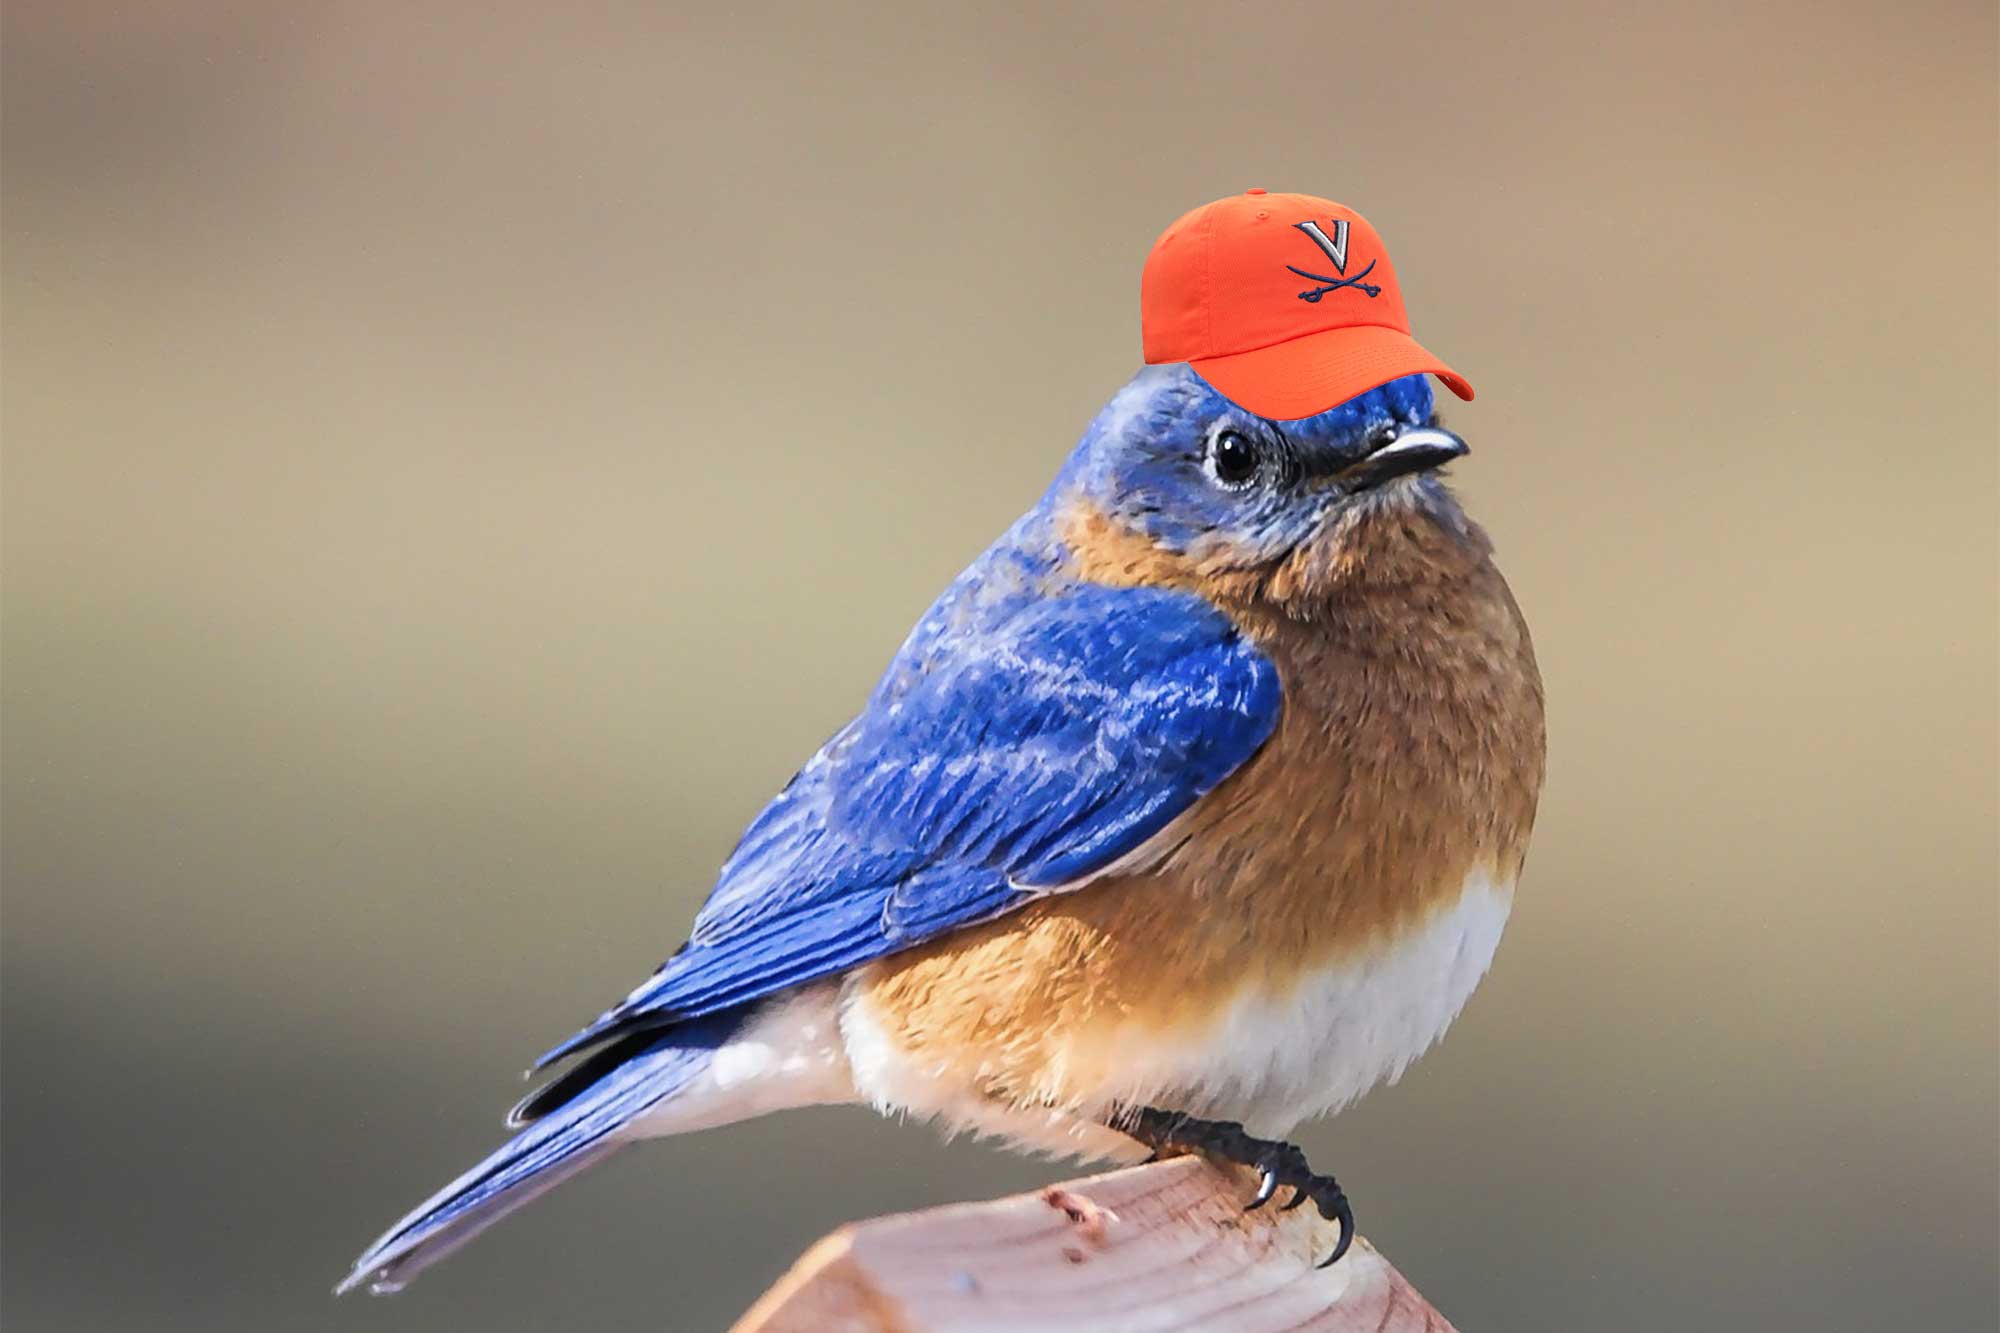 An eastern blue bird wearing an orange UVA hat